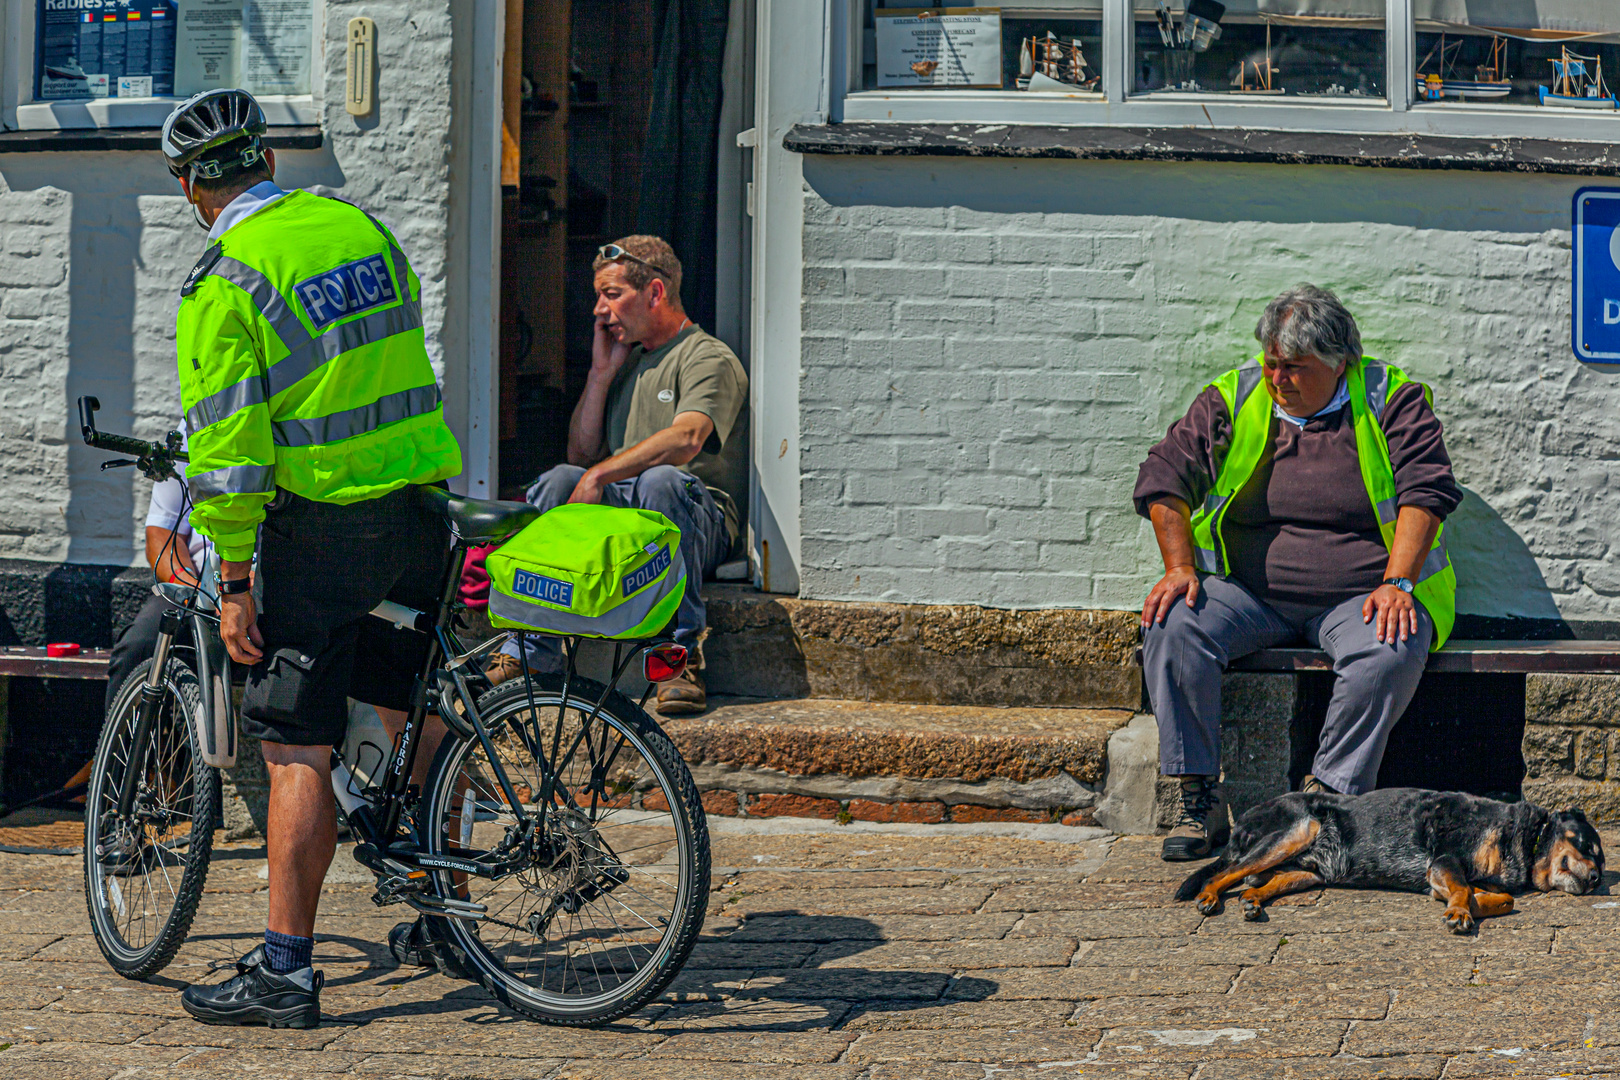 Police in St. Ives